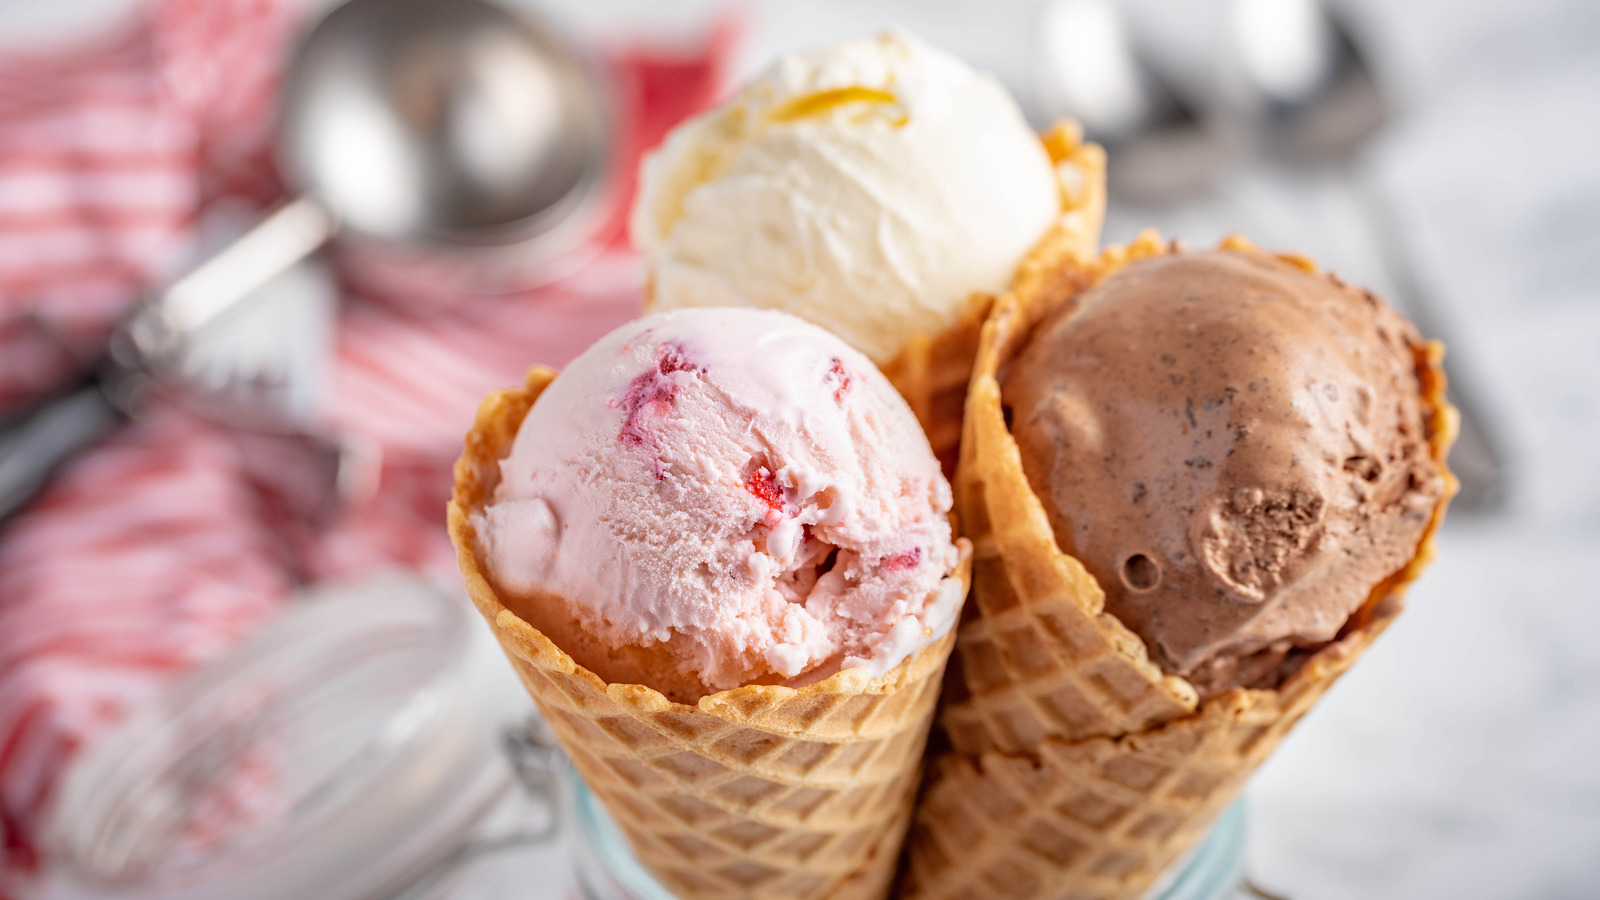 Hill Country Fare Sweet Treats Vanilla Ice Cream